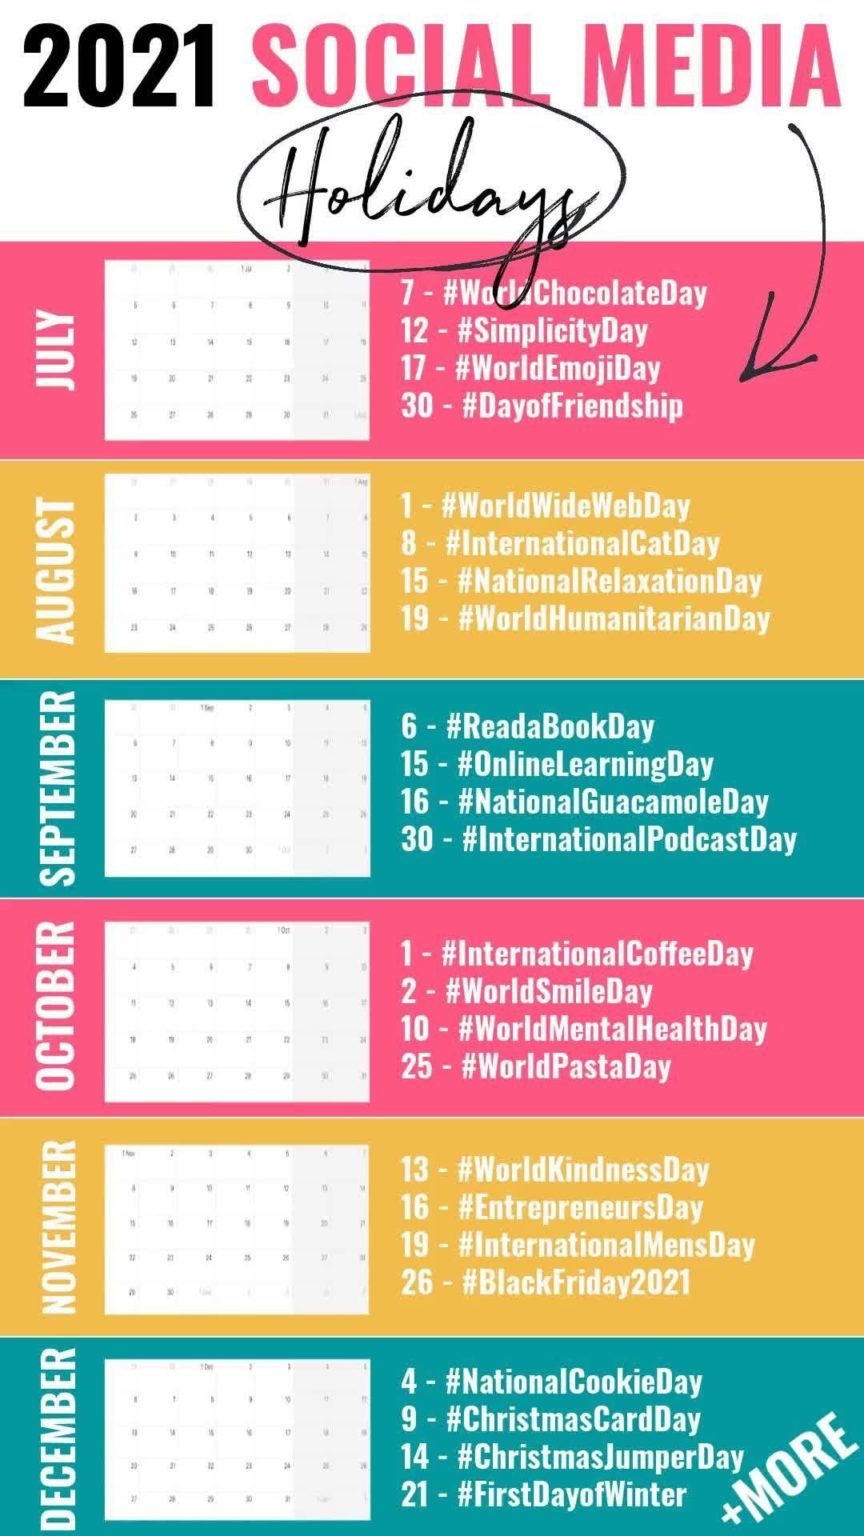 Social Media Calendar 2021 Key Marketing Dates (UK) + Hashtags 